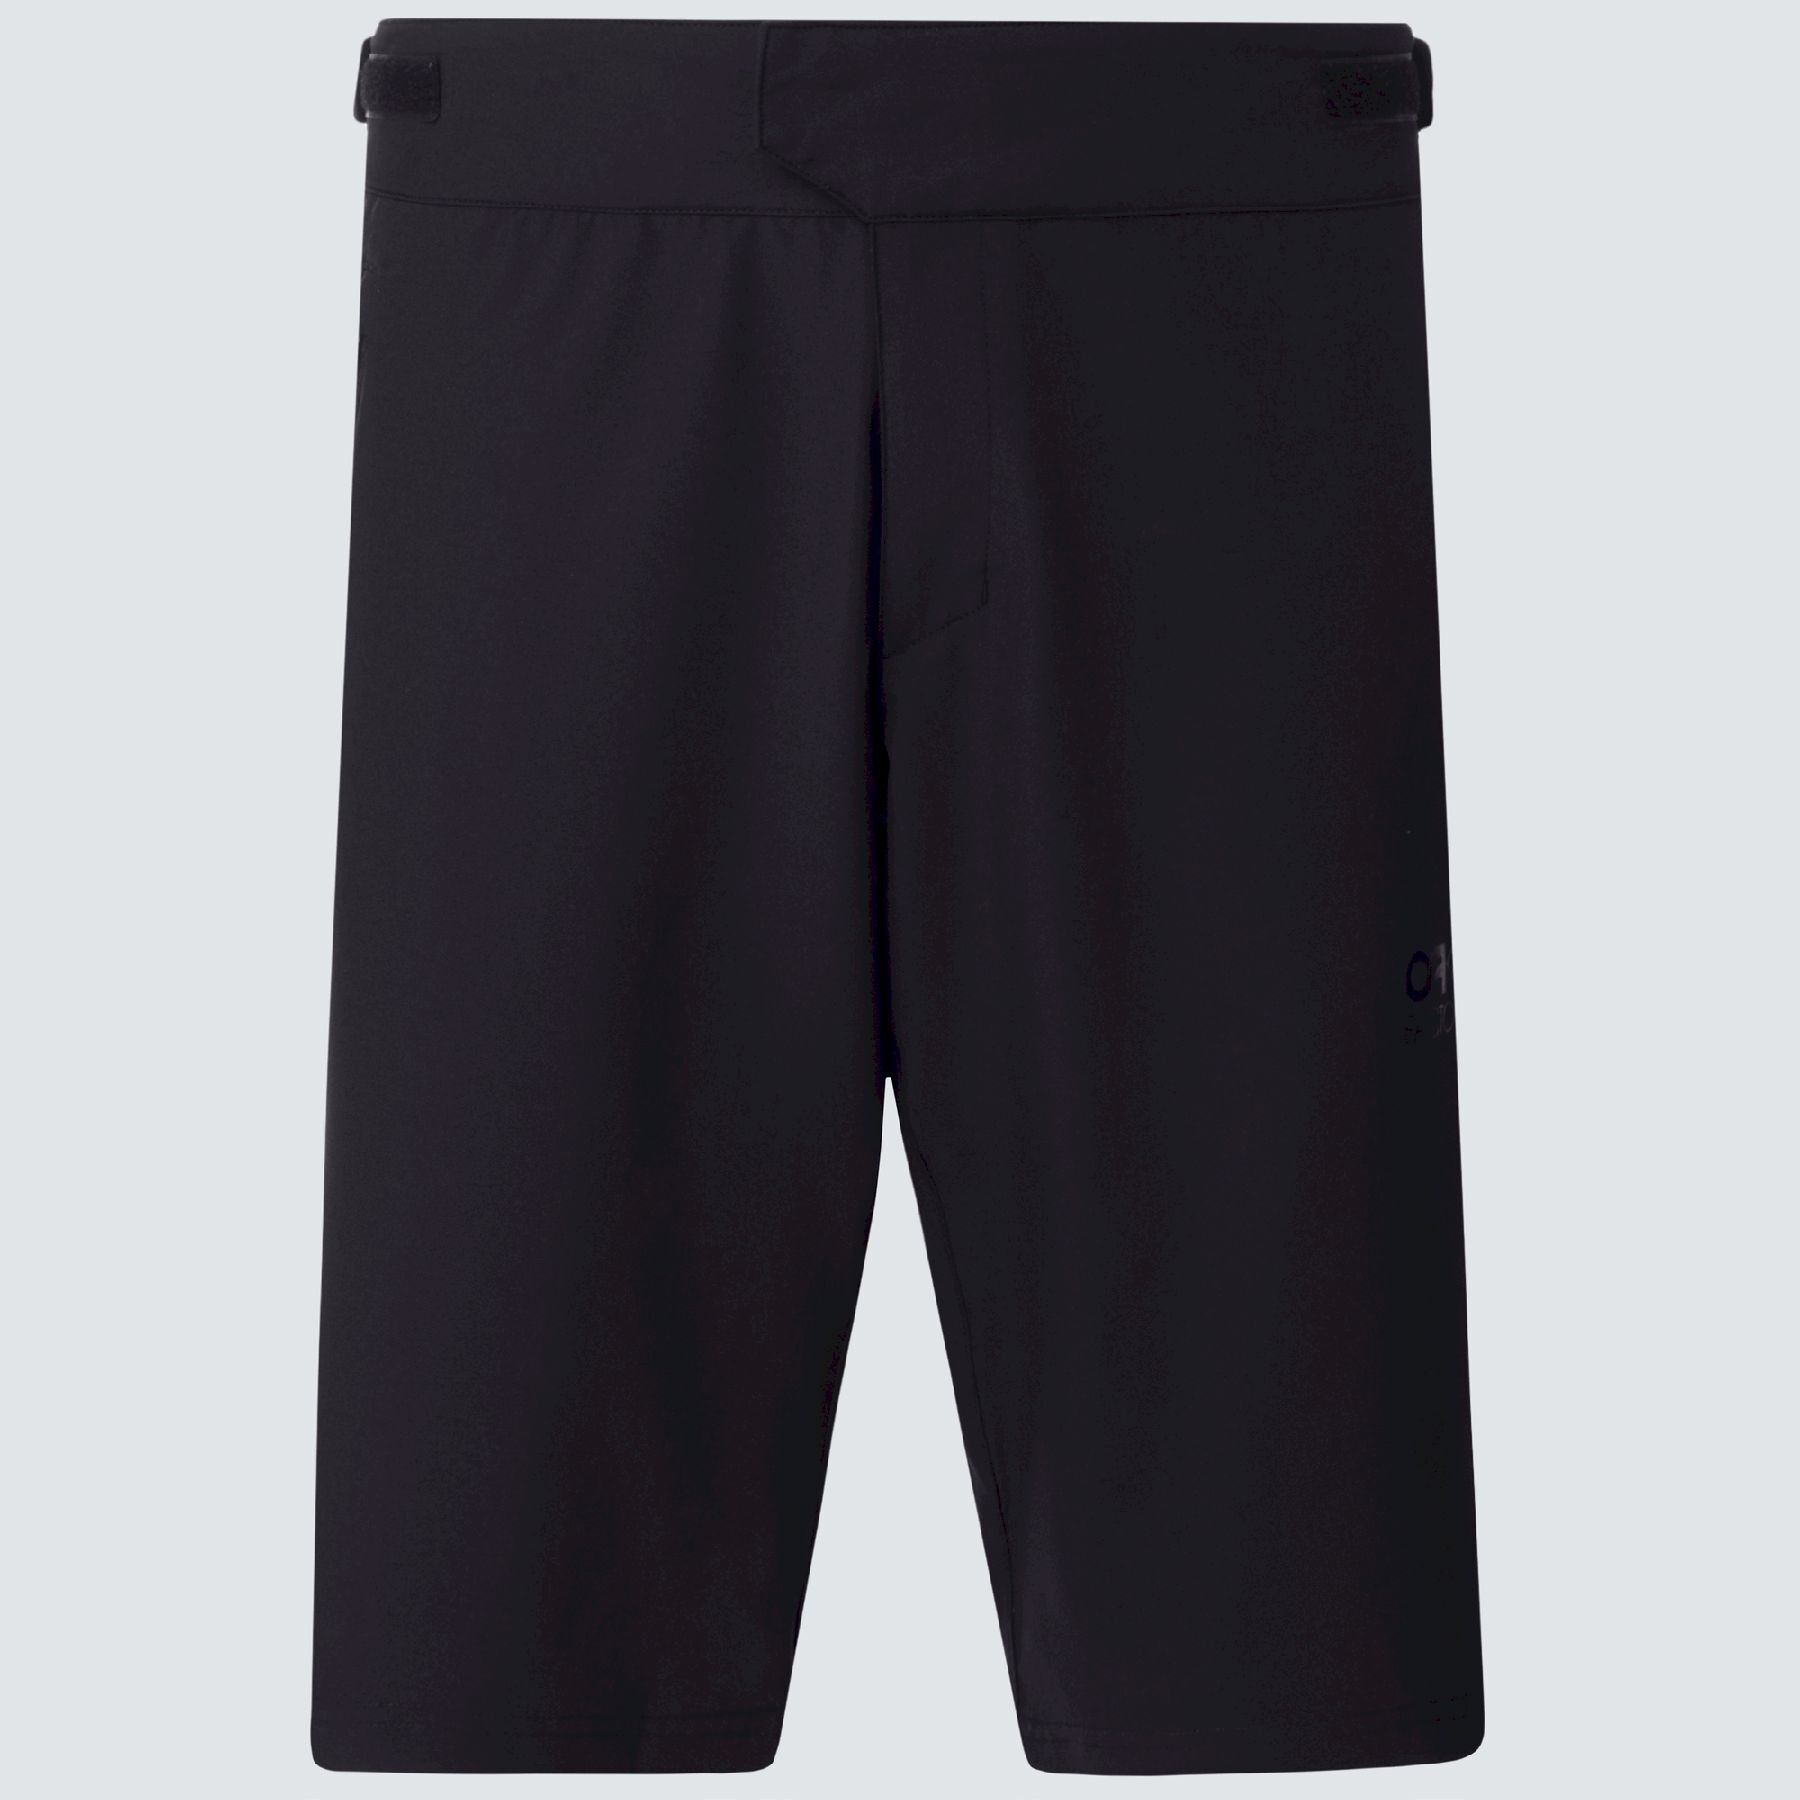 Oakley Arroyo Trail Shorts - MTB shorts - Men's